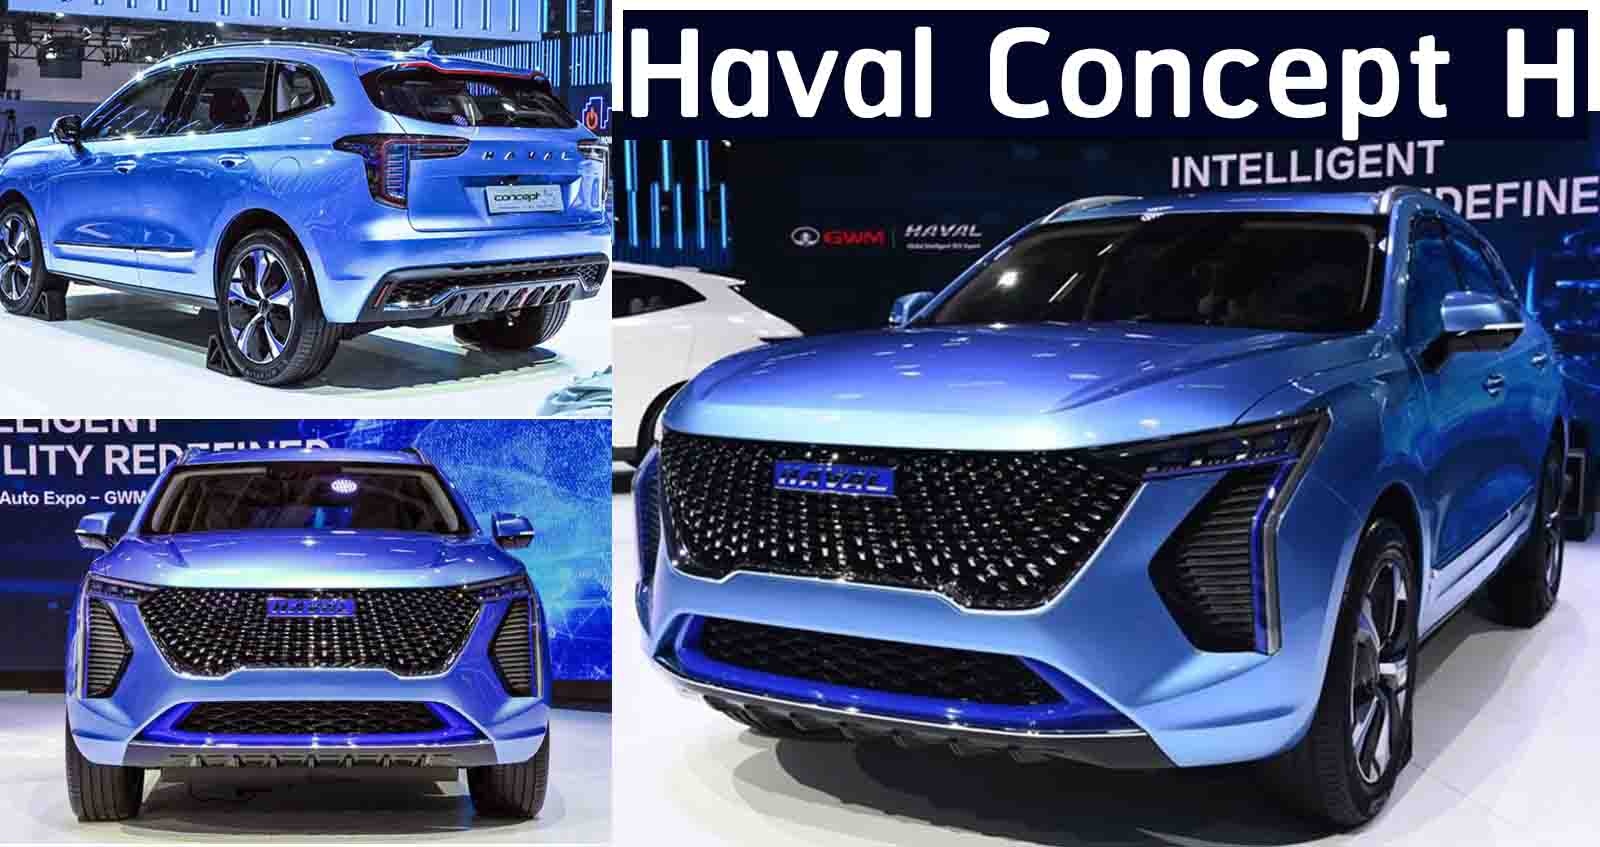 Haval Concept H รถต้นแบบของ ซีรีย์ H